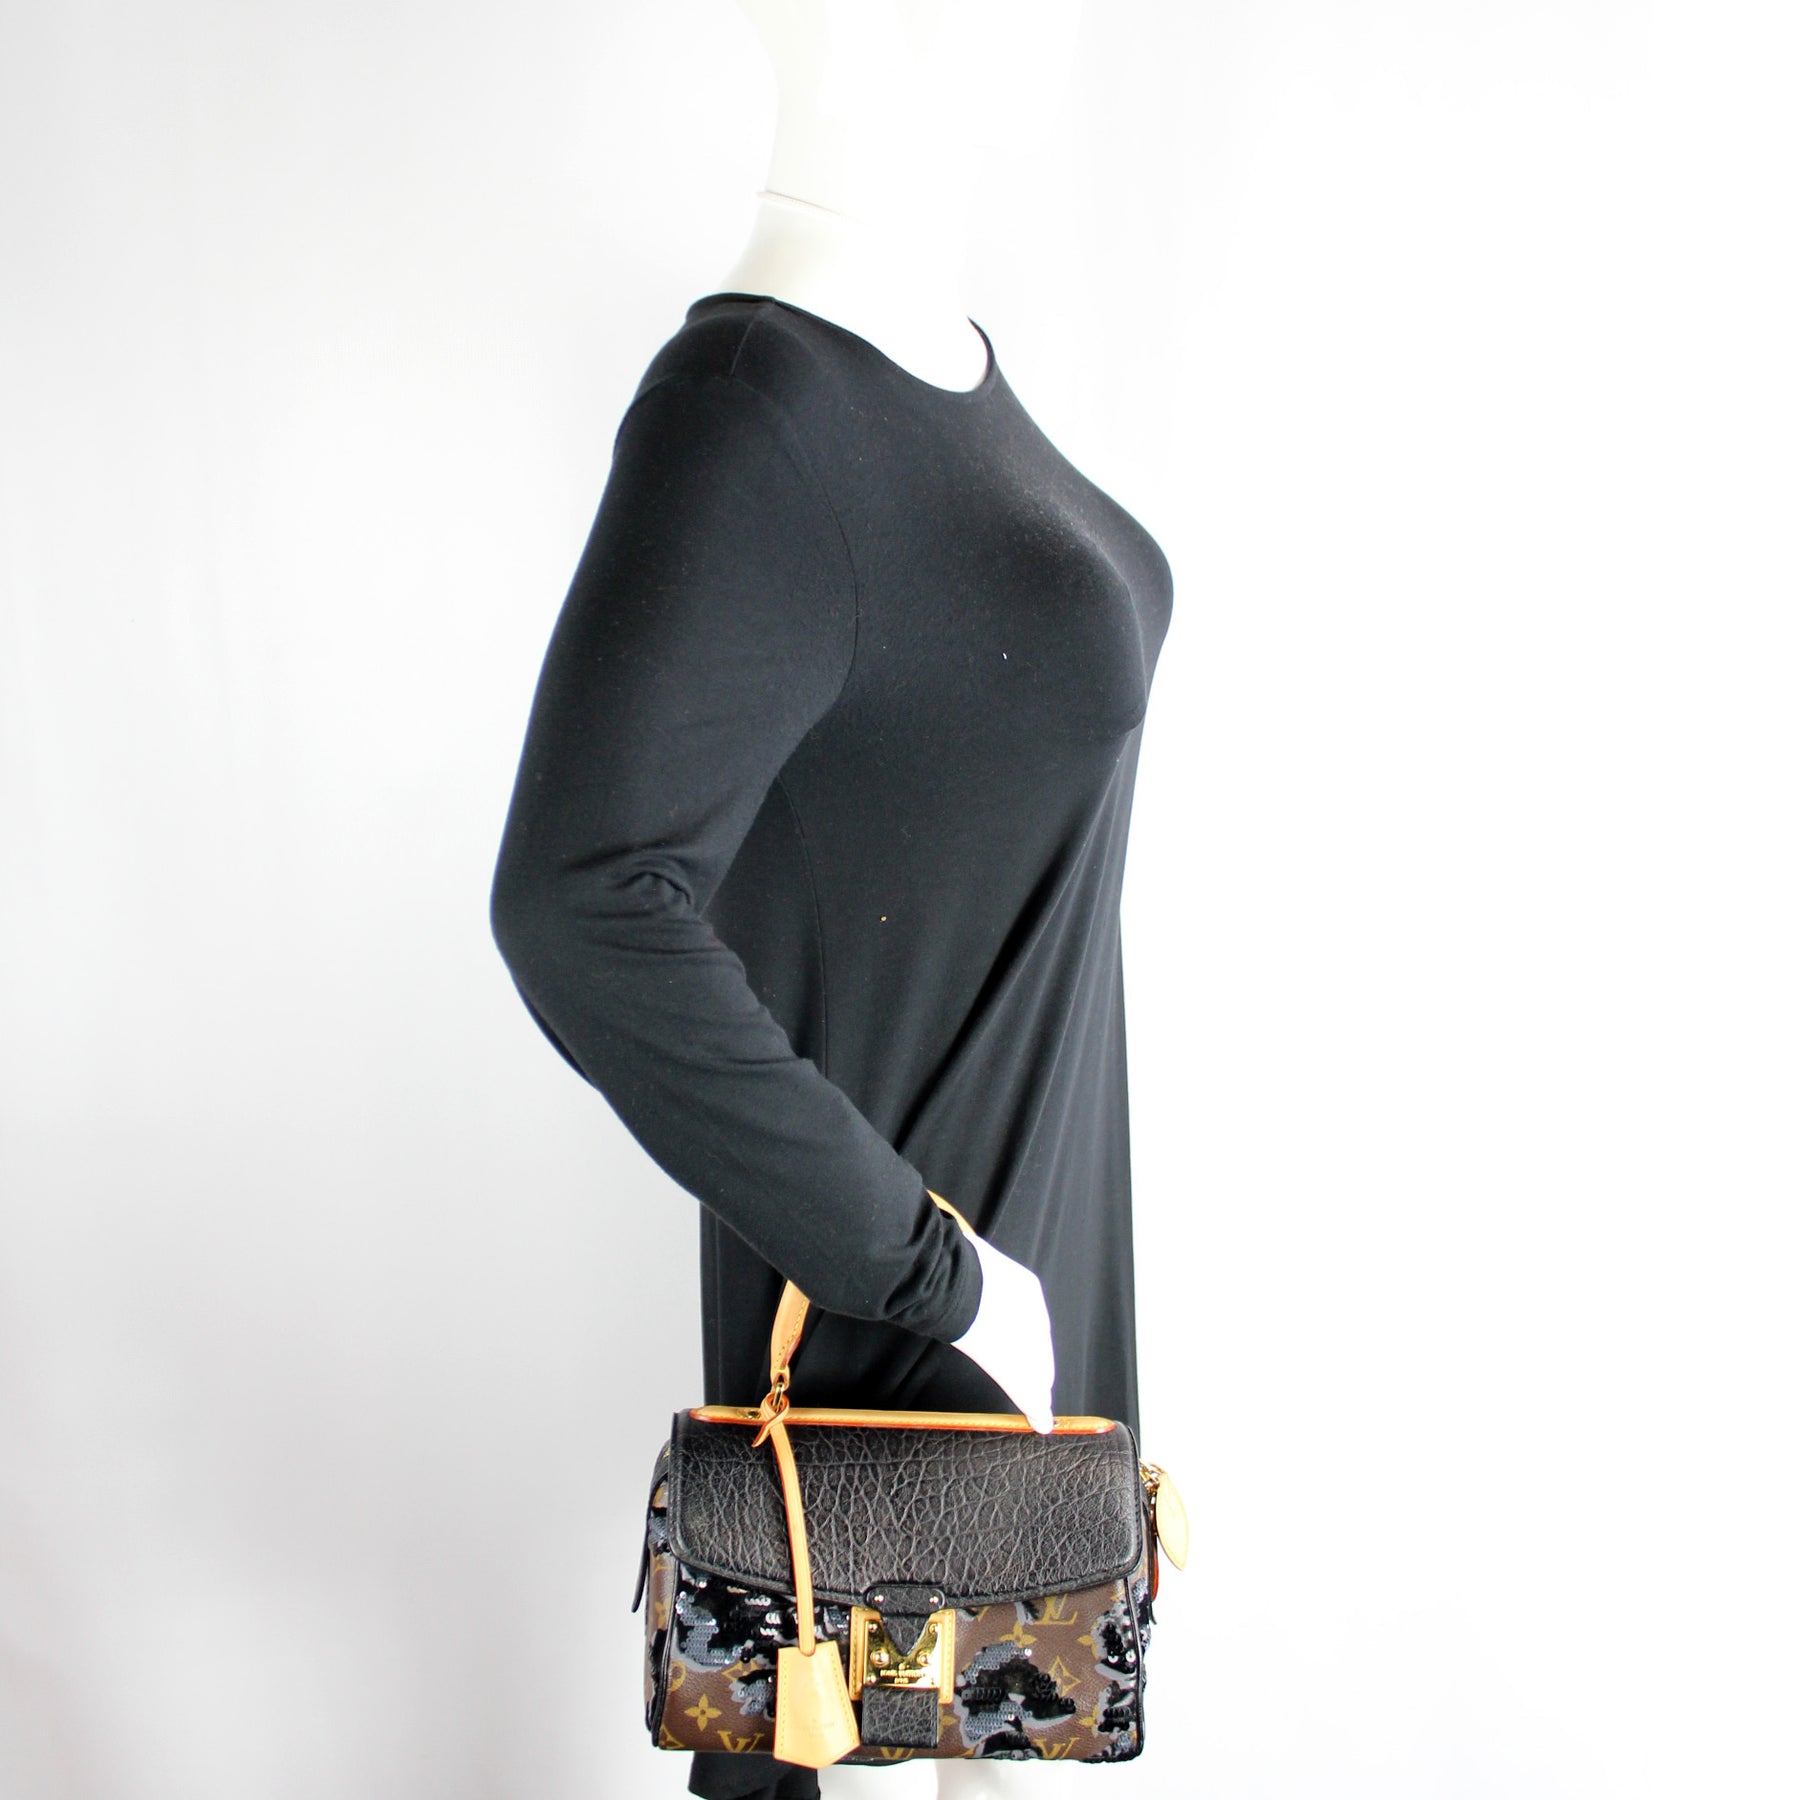 Carrousel Fleur De Jais Monogram – Keeks Designer Handbags